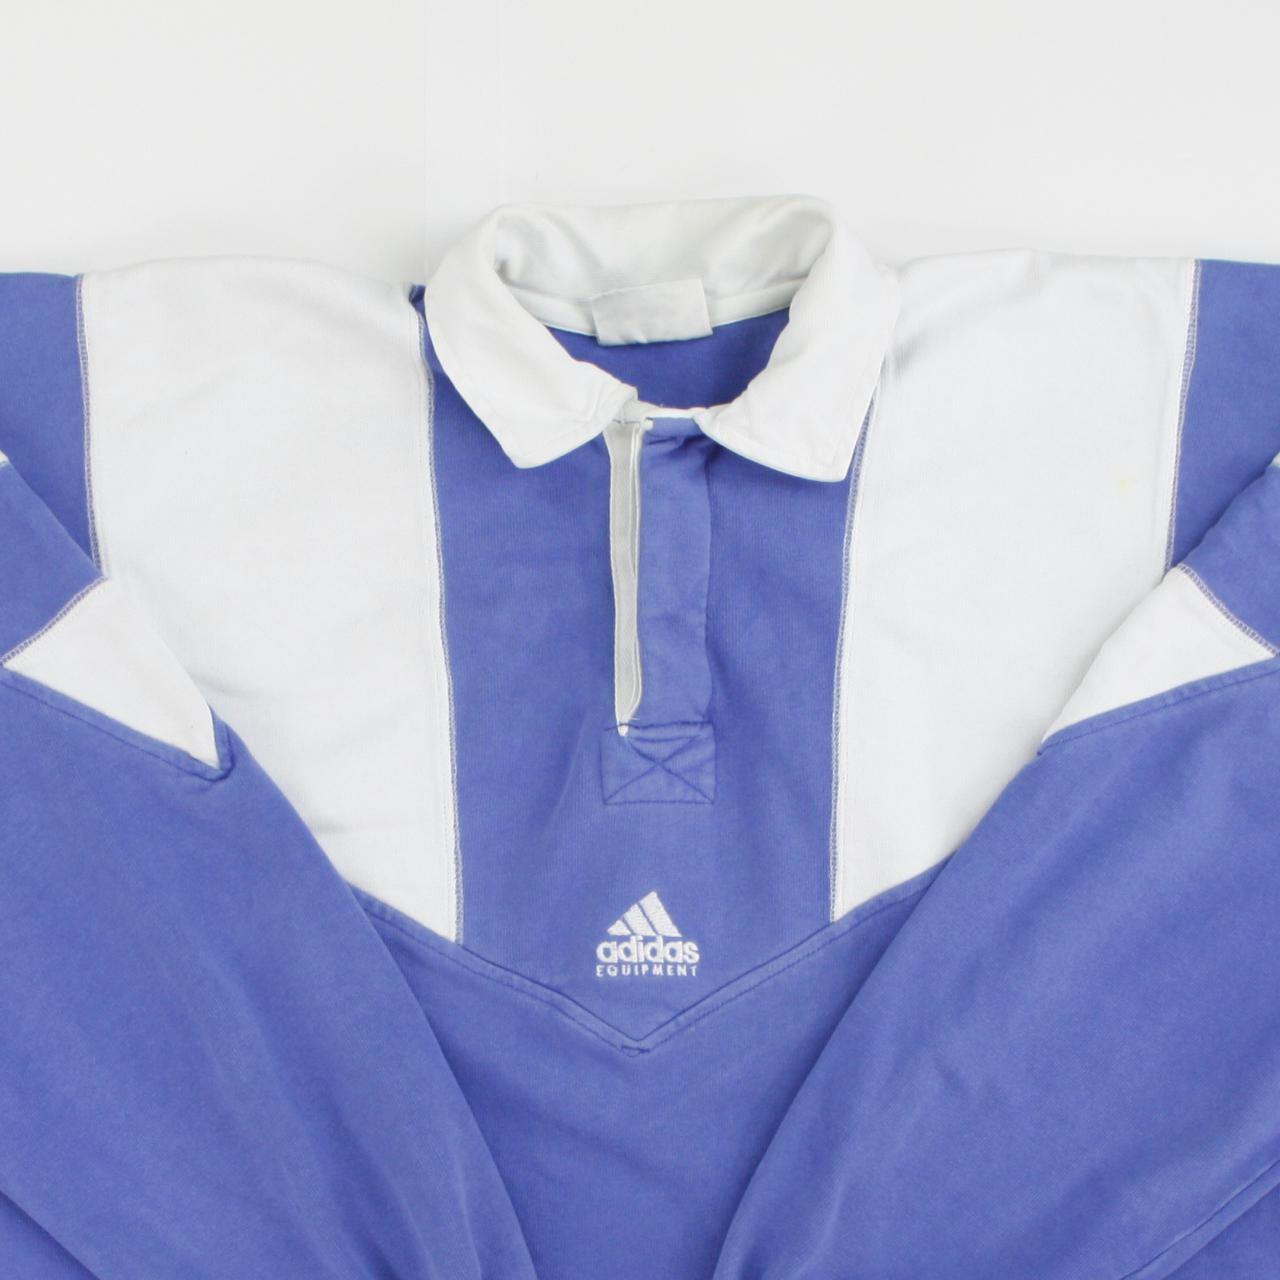 Adidas Equipment Rugby Shirt (XL) - dream vintage